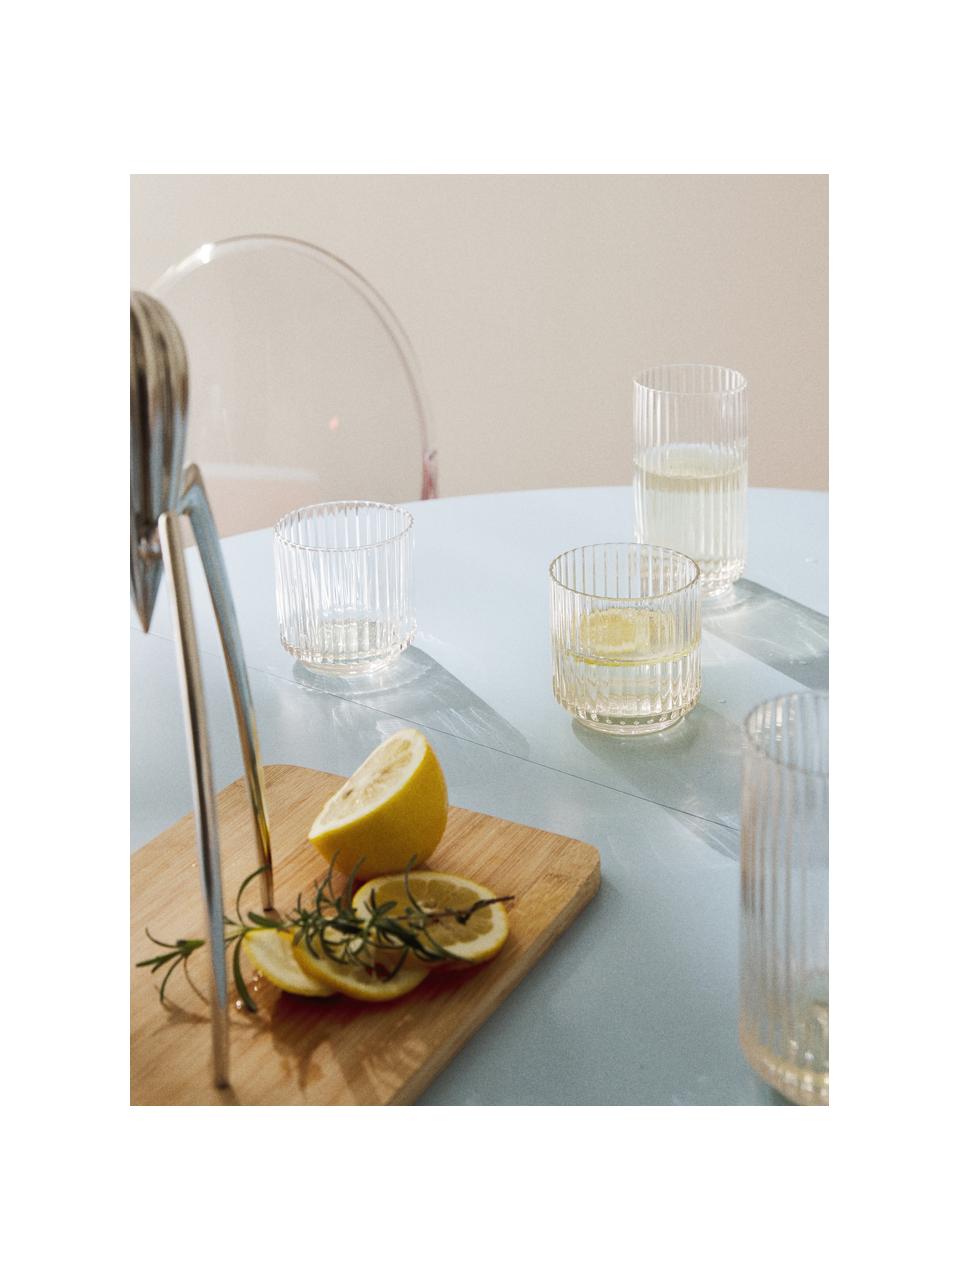 Bicchieri in vetro soffiato Aleo 4 pz, Vetro sodico-calcico, Trasparente, Ø 7 x Alt. 14 cm, 430 ml